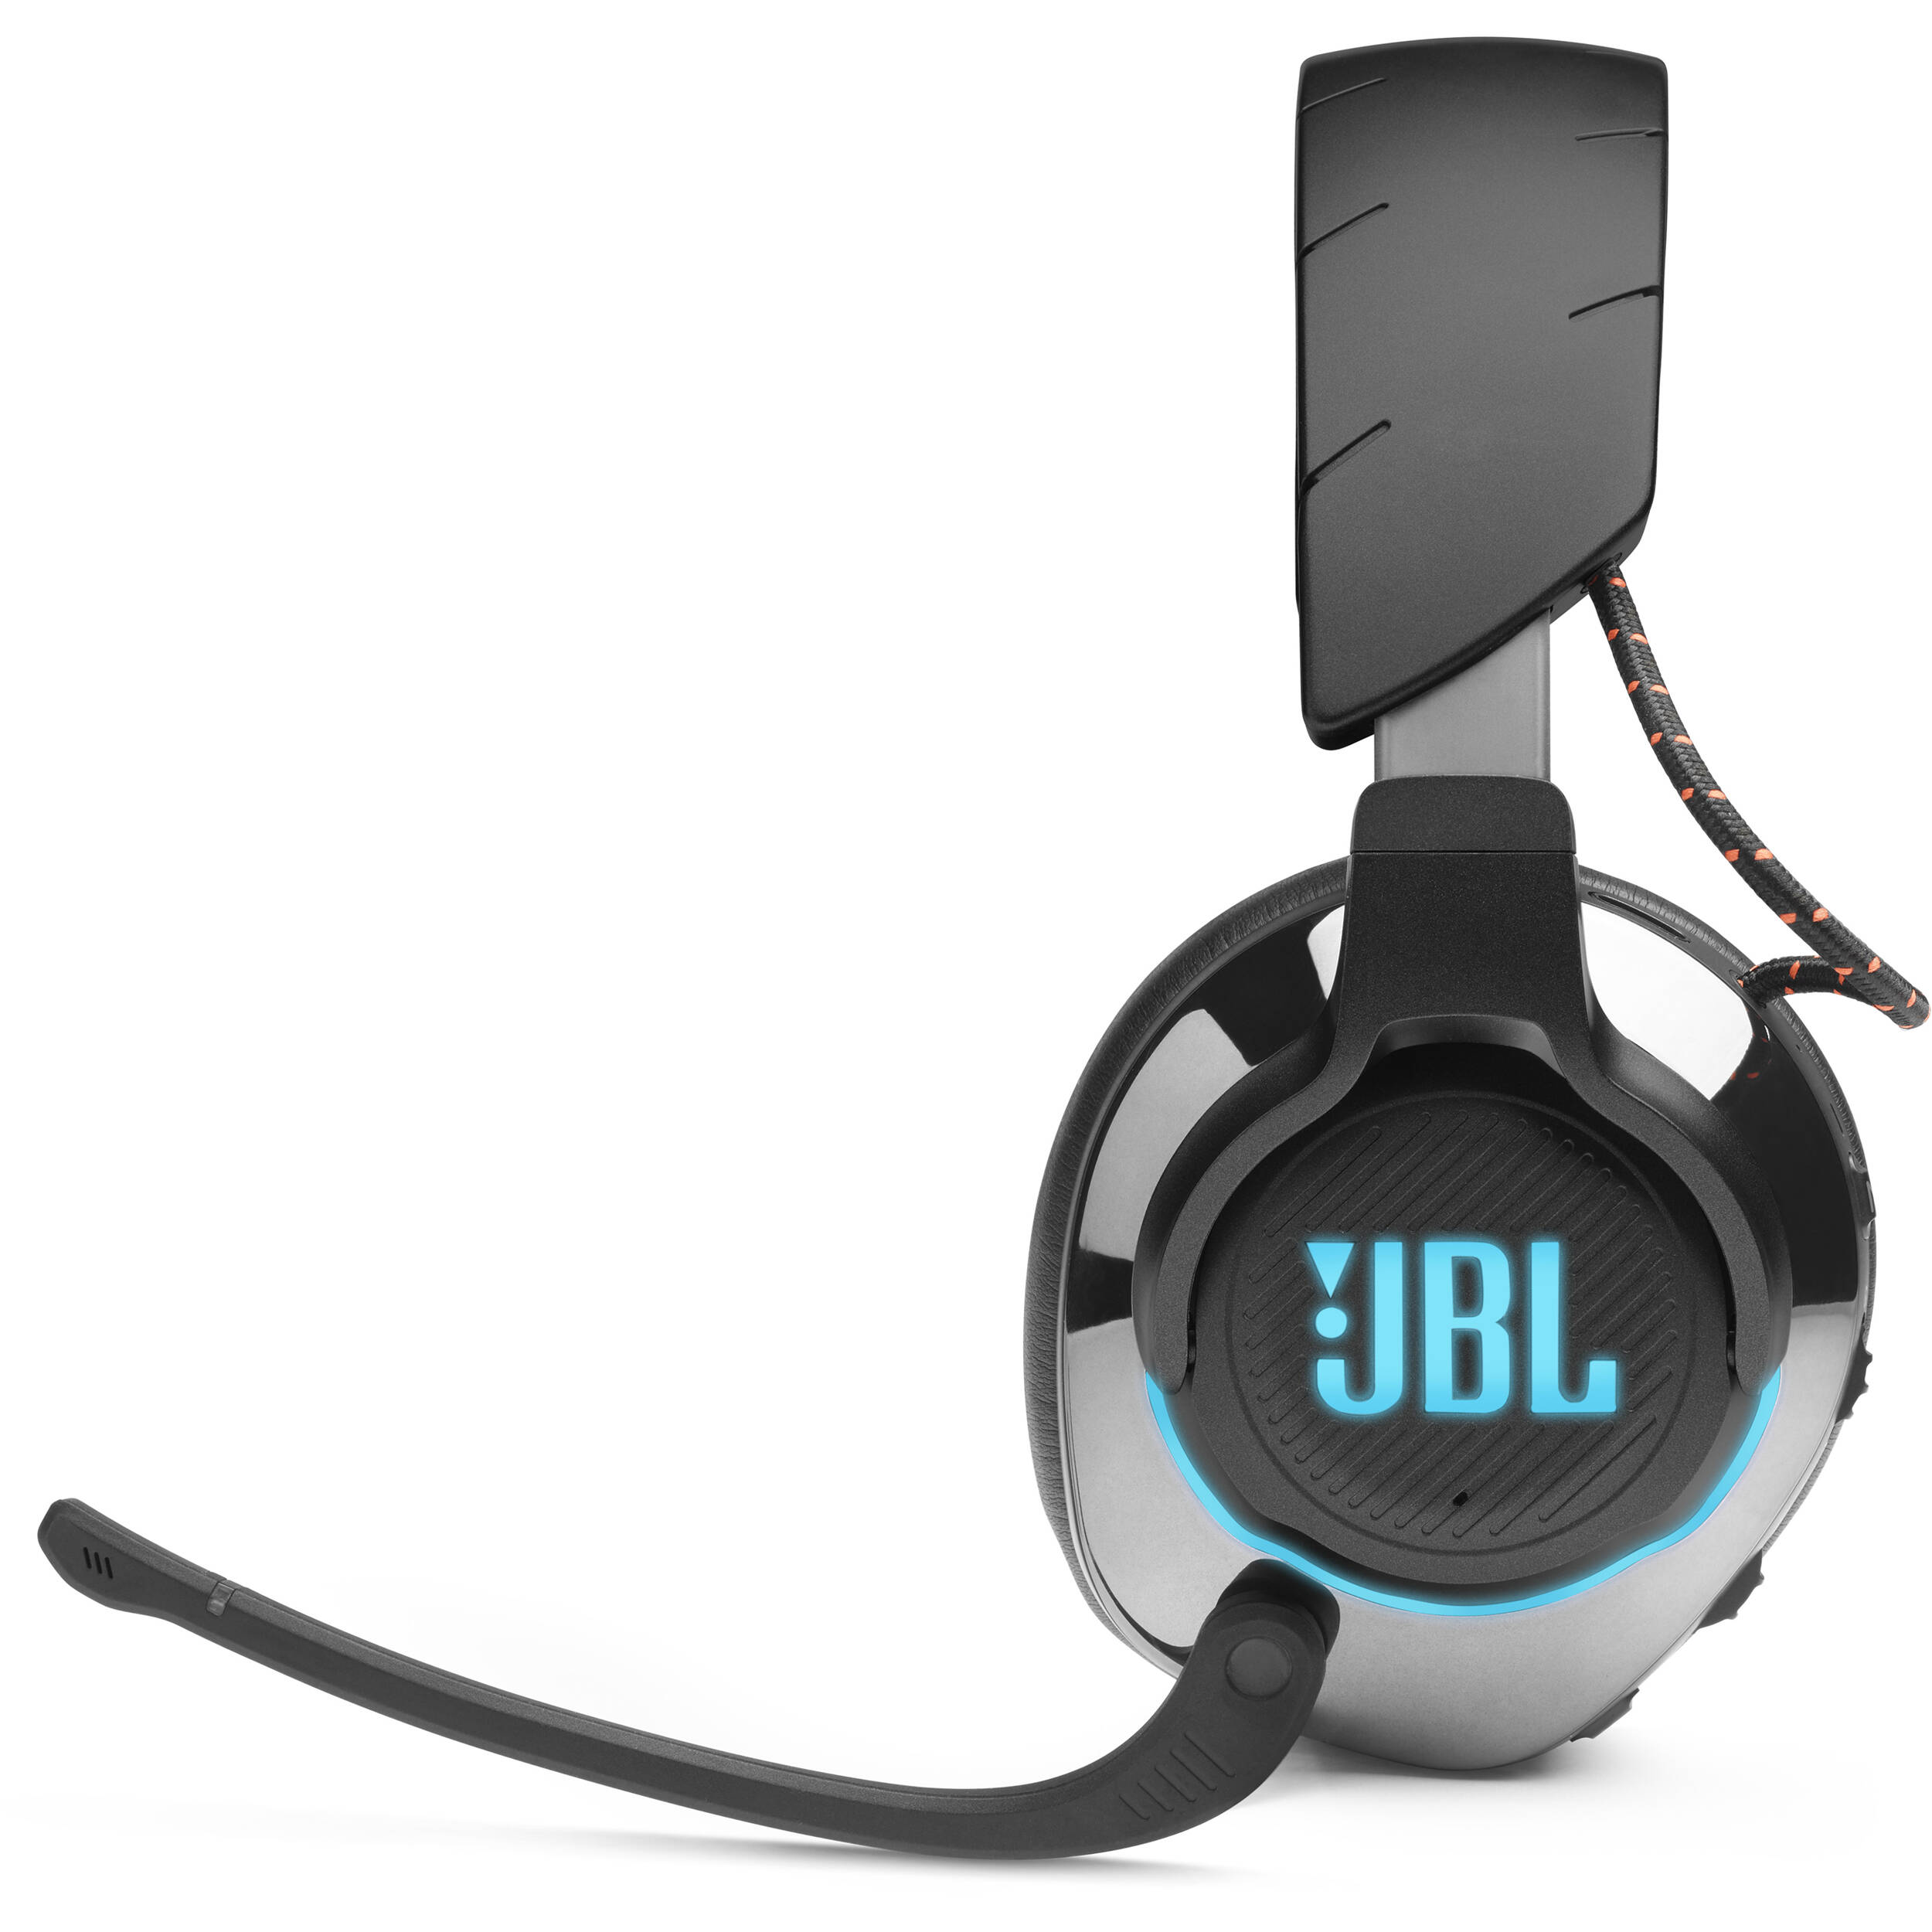 JBL JBLQ810WLBLKAM-Z Quantum 810 Wireless Over-Ear Performance Gaming Headset Black - Certified Refurbished